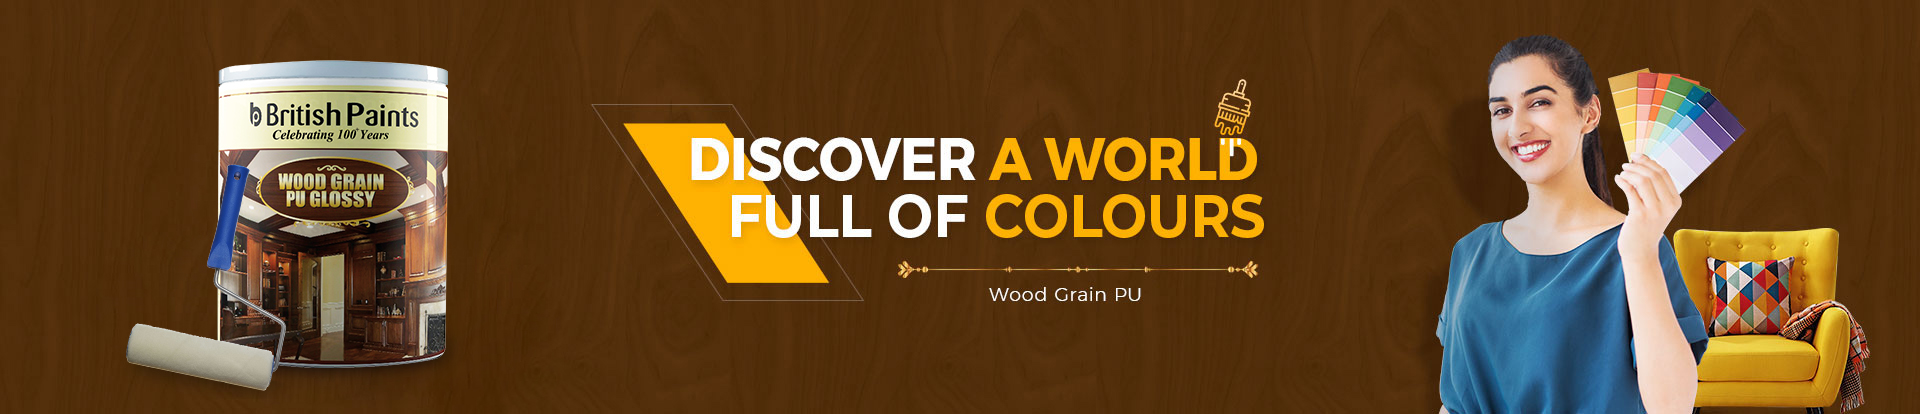 Wood Grain PU